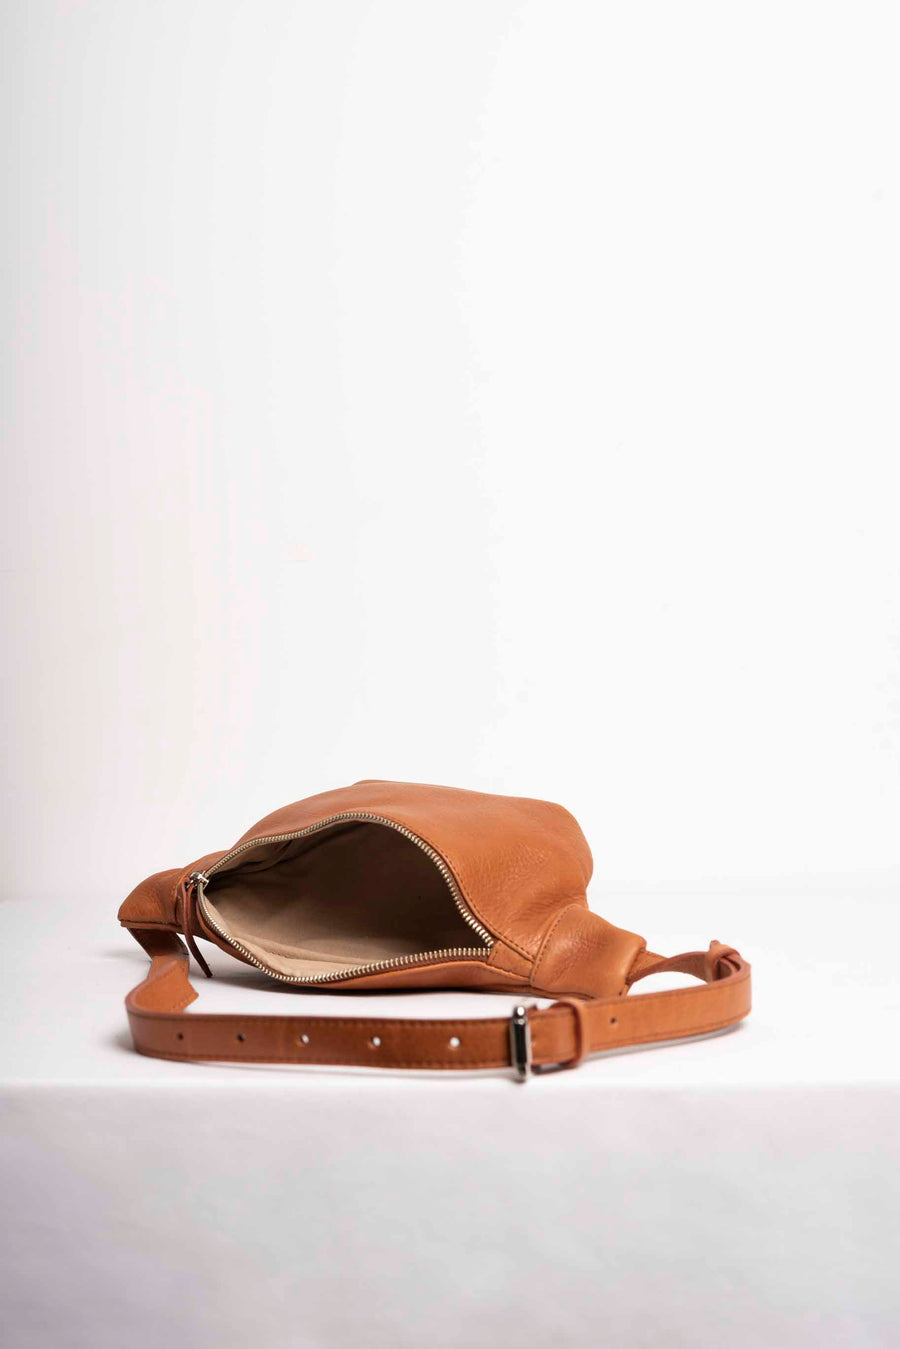 Leather fanny pack. Full grain leather belt bag. Caramel vegetable tanned leather.